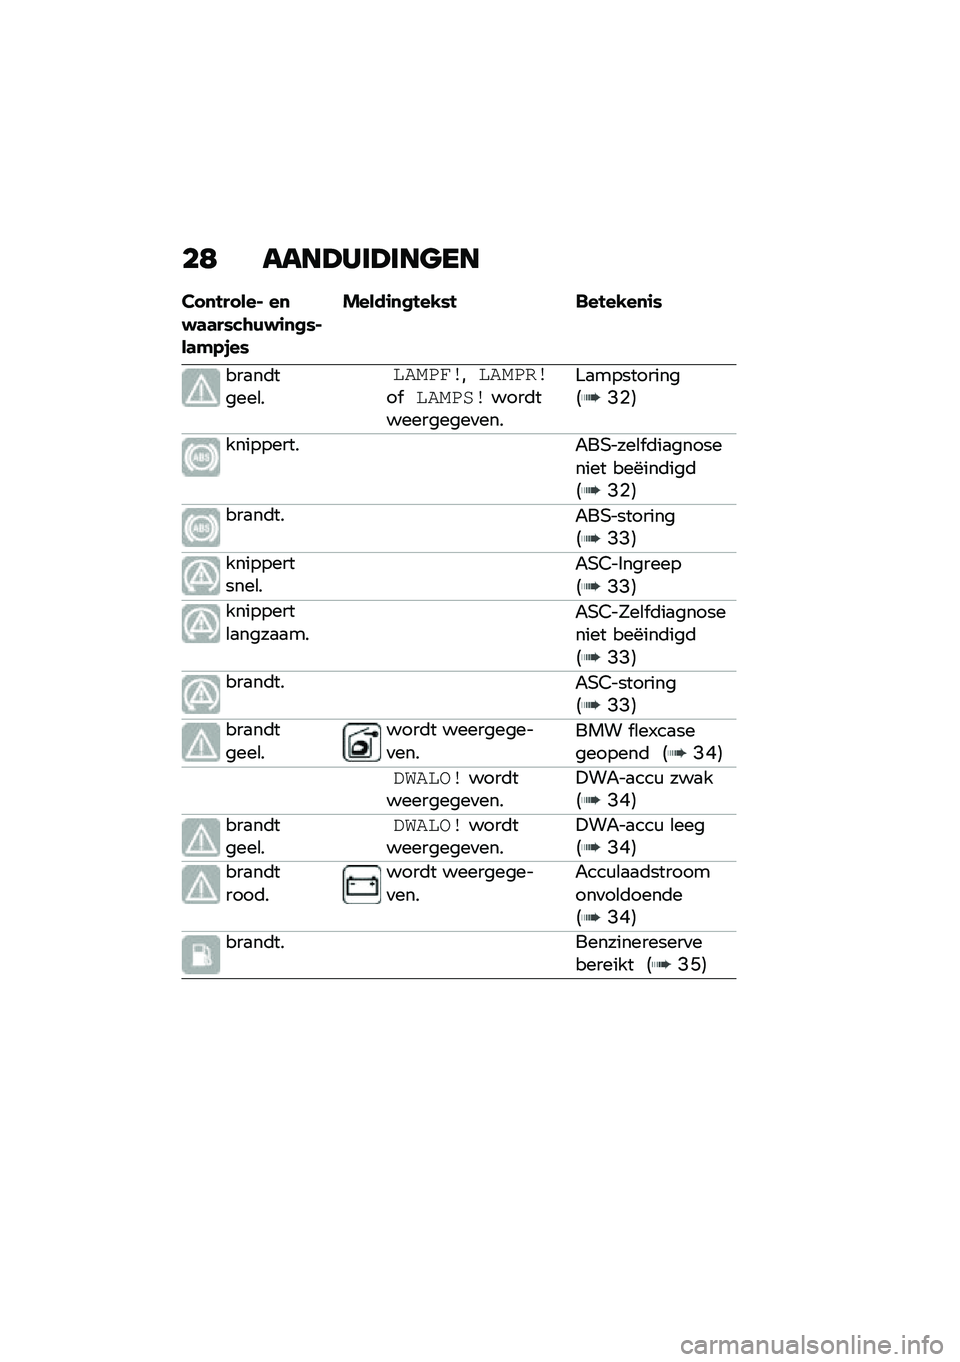 BMW MOTORRAD C 400 GT 2020  Handleiding (in Dutch) ��9 ����?���?���
��
�� �
�!�� ���% ��
�$�	�	��*��\b�)�$�\f�
�
�*�%��	�#�.�,��*
�����\f�
�
�!��-�*�! ���!��-��
�\f�*
���
��	�����\b�
��������������� �